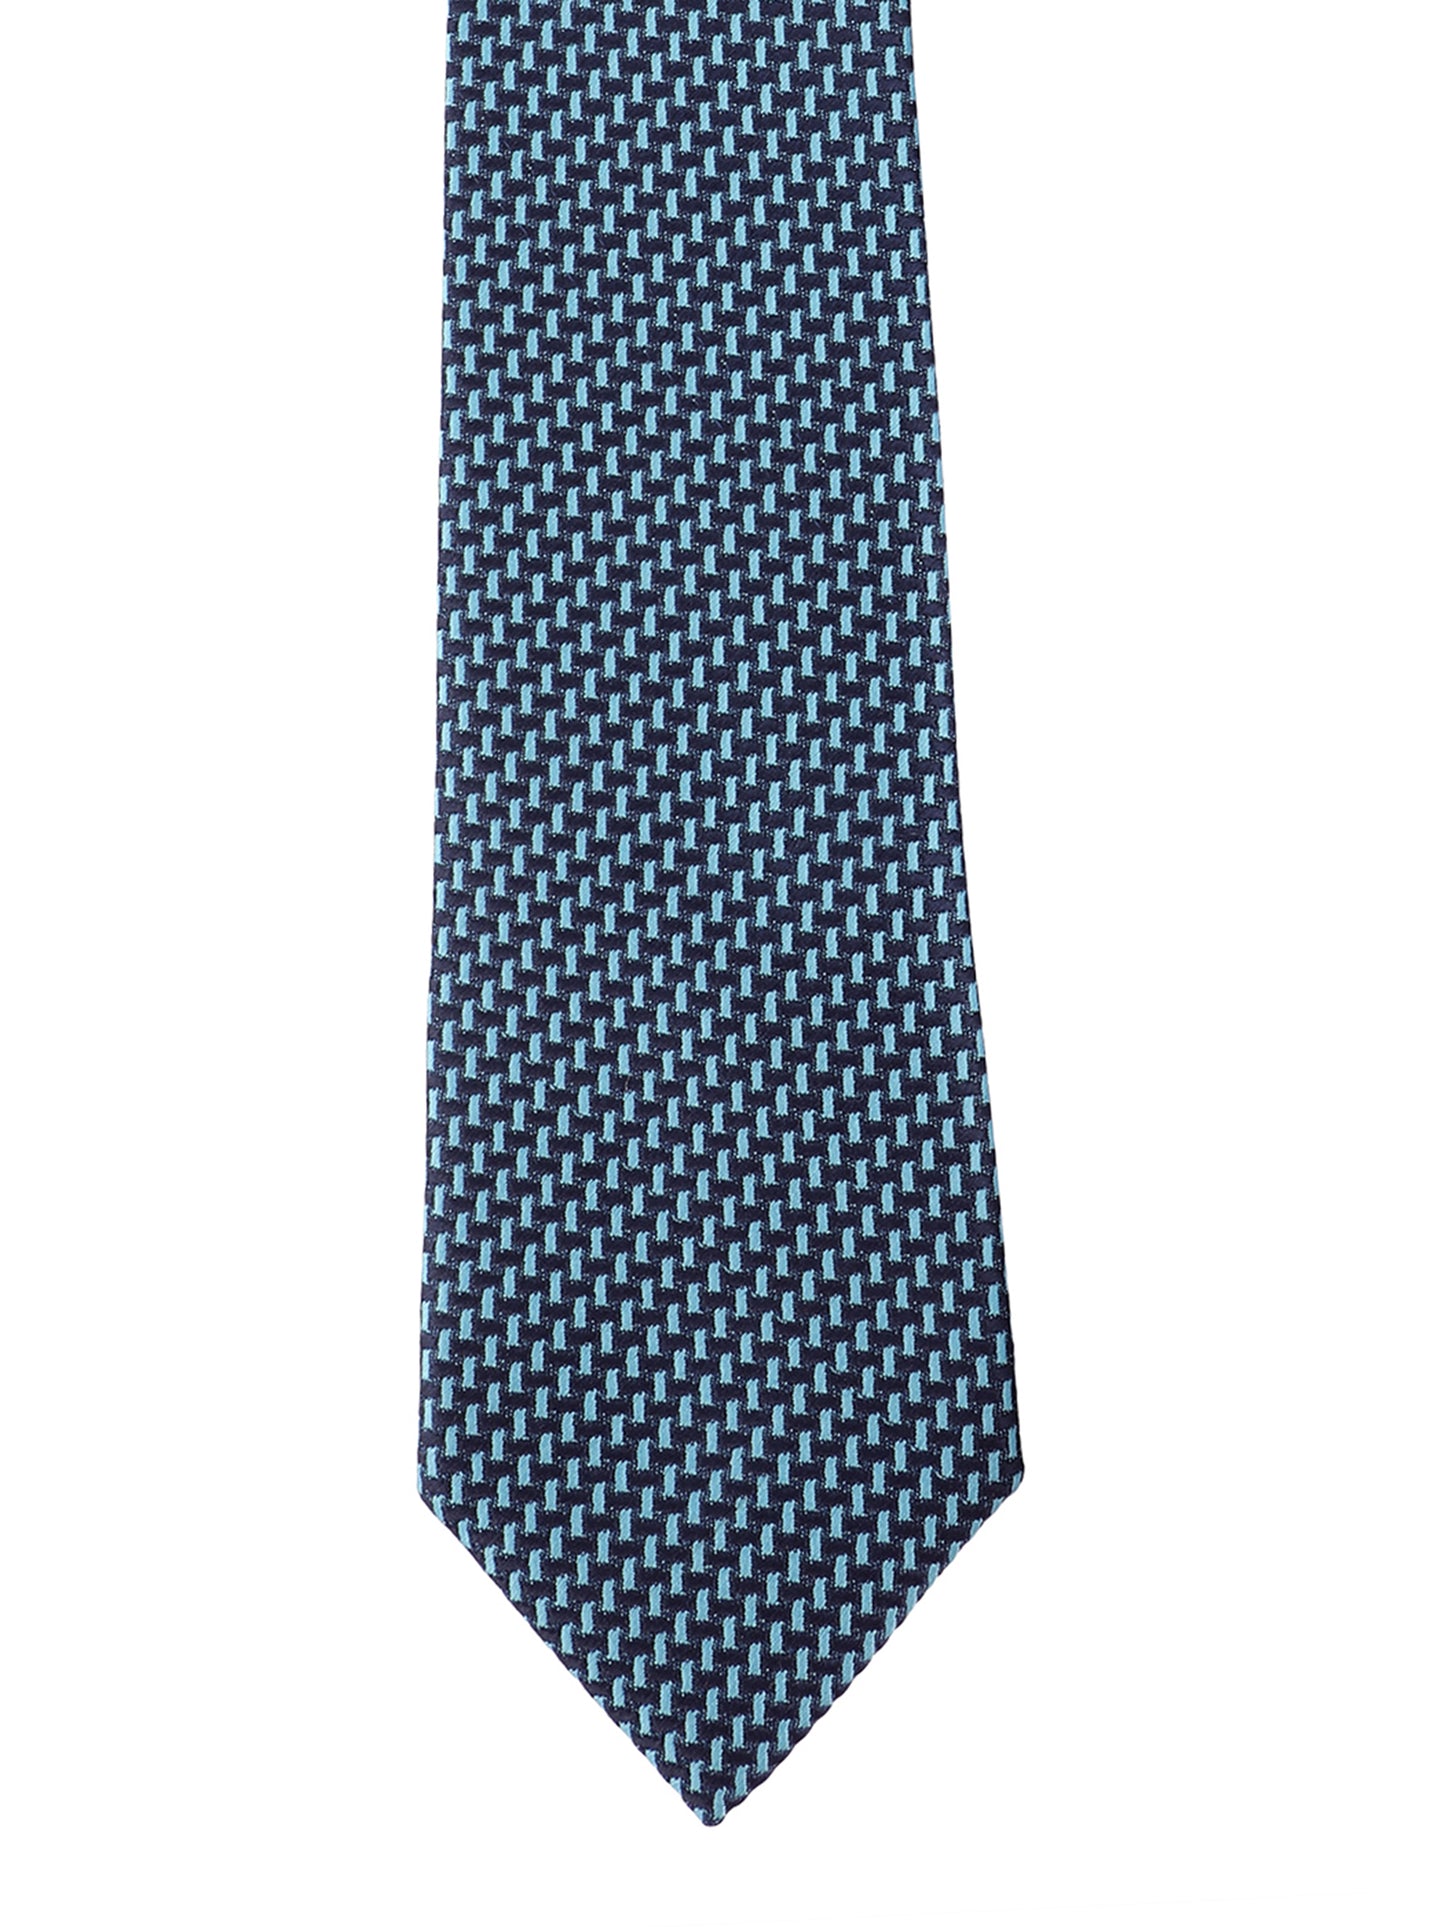 Alvaro Castagnino Microfiber BLUE Colored Necktie for Men